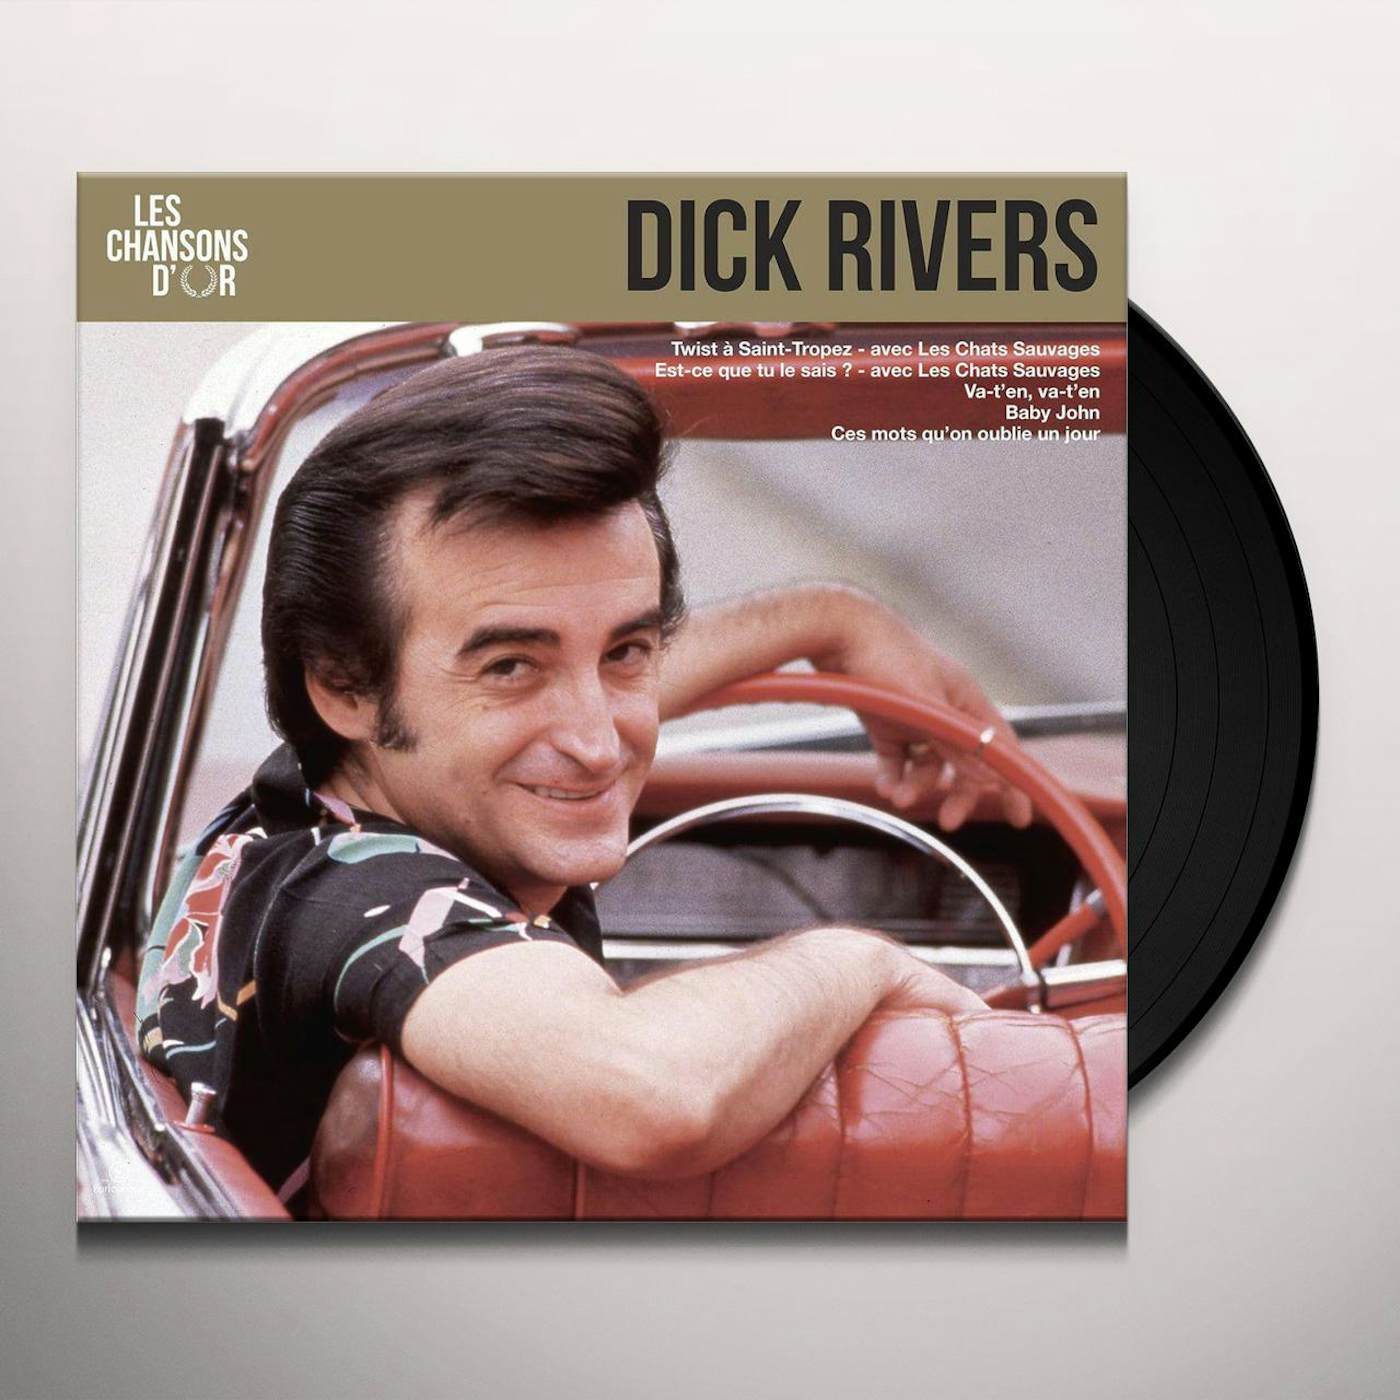 Dick Rivers LES CHANSONS D'OR Vinyl Record